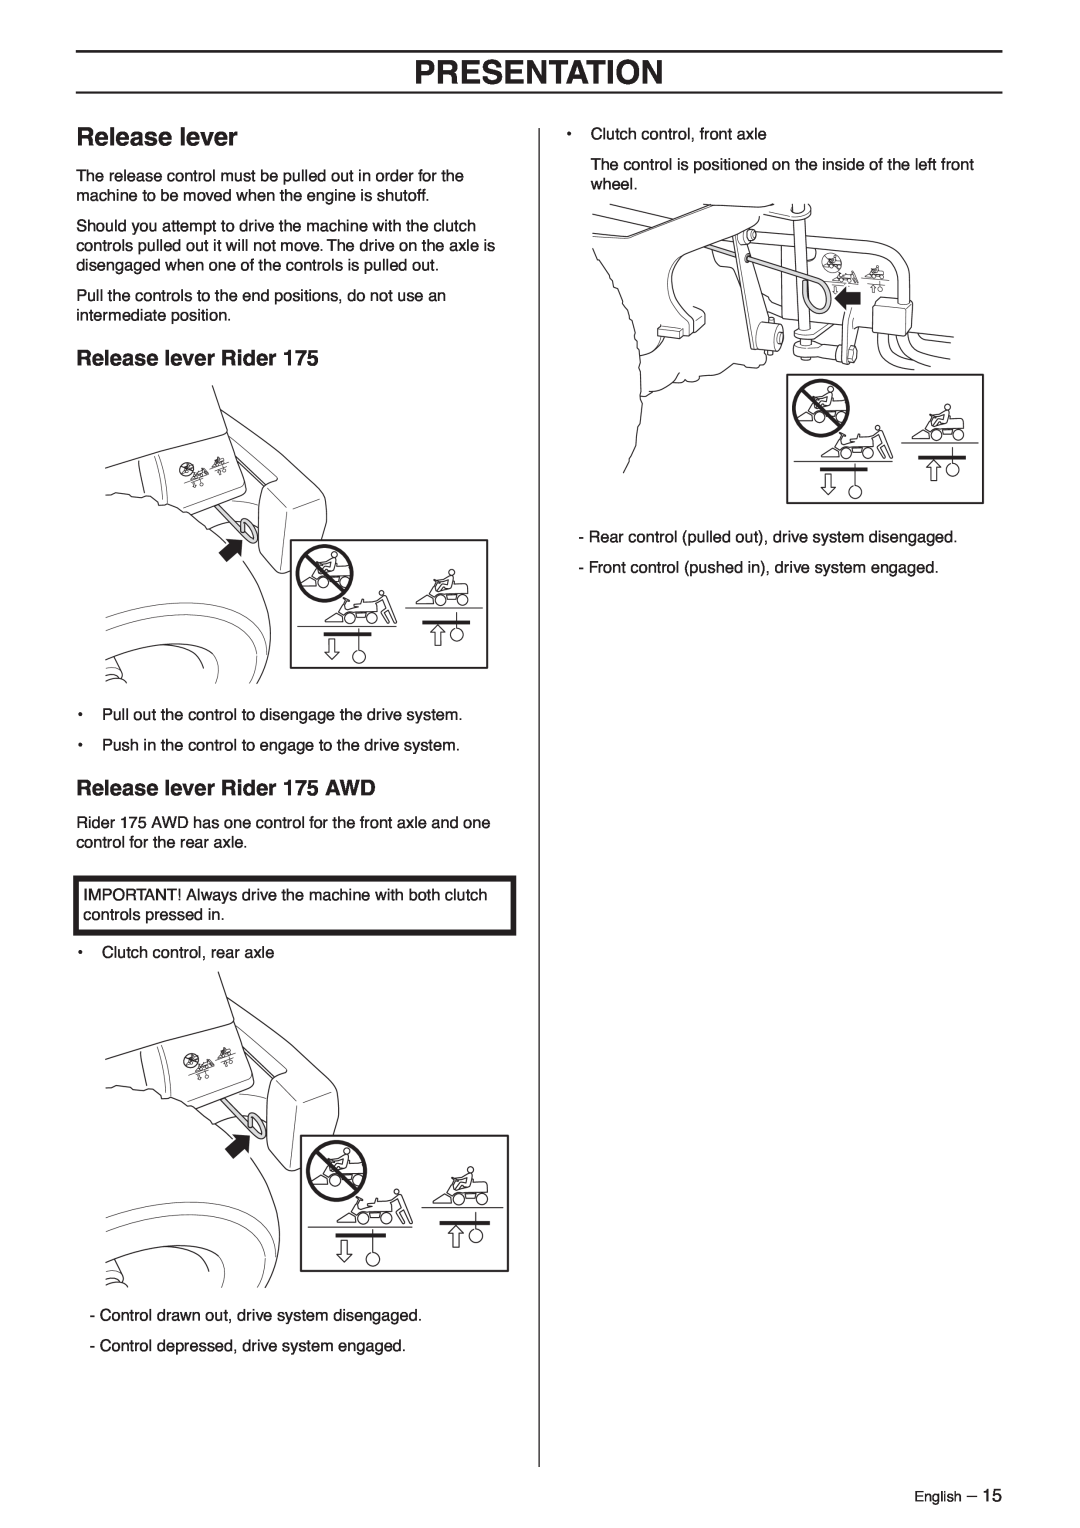 Husqvarna manual Release lever Rider 175 AWD, Presentation 